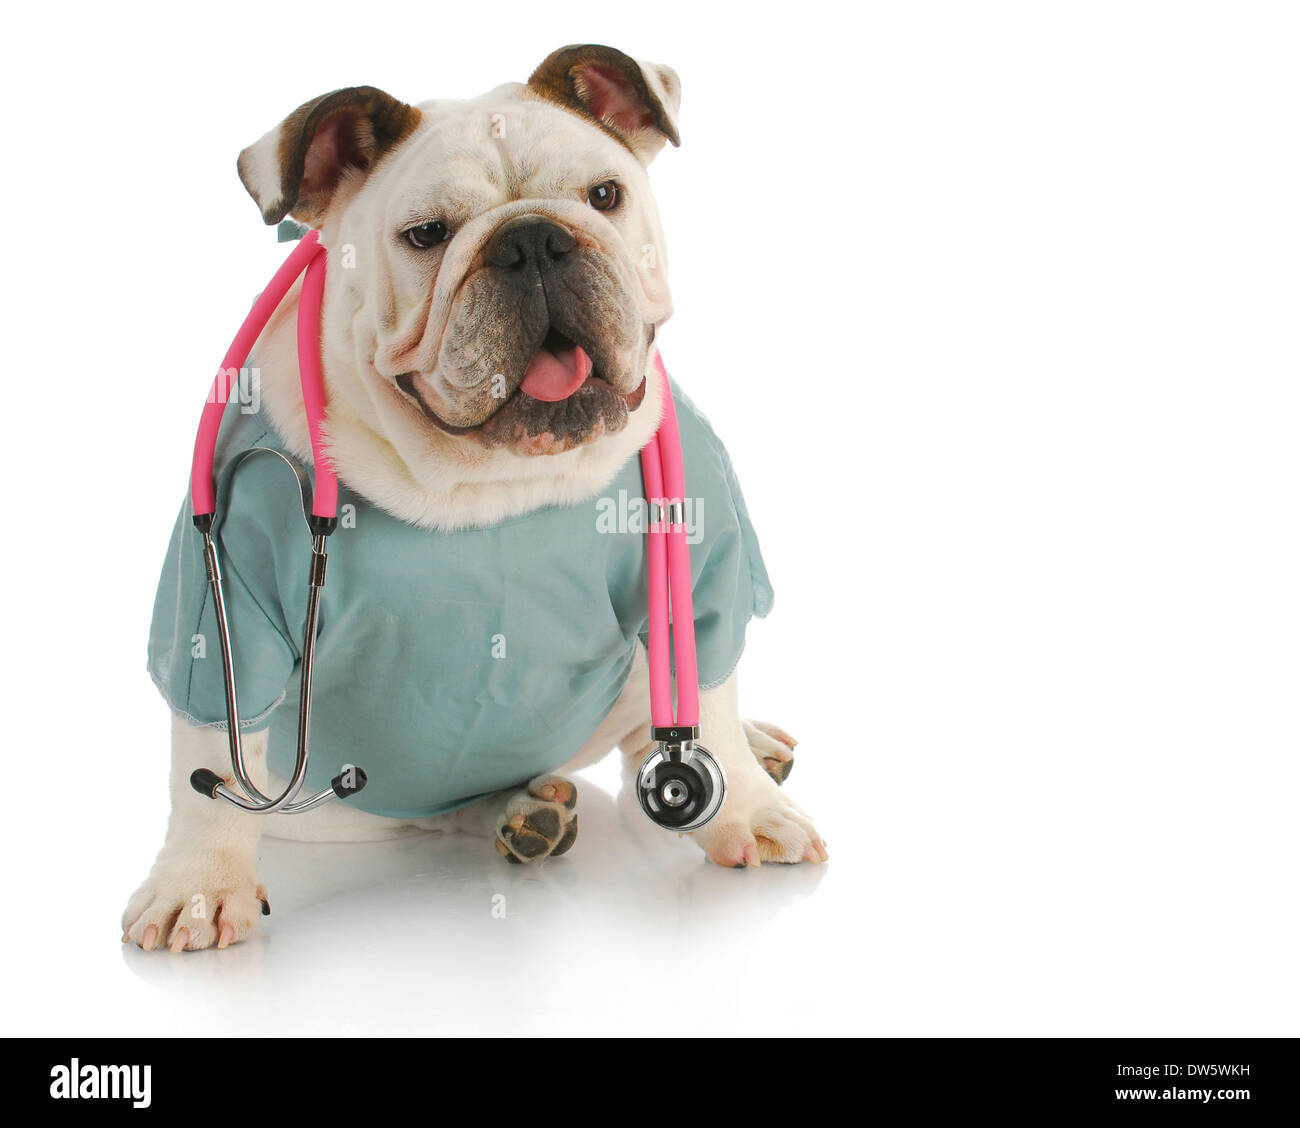 veterinary care- english bulldog doctor with stethoscope Stock Photo